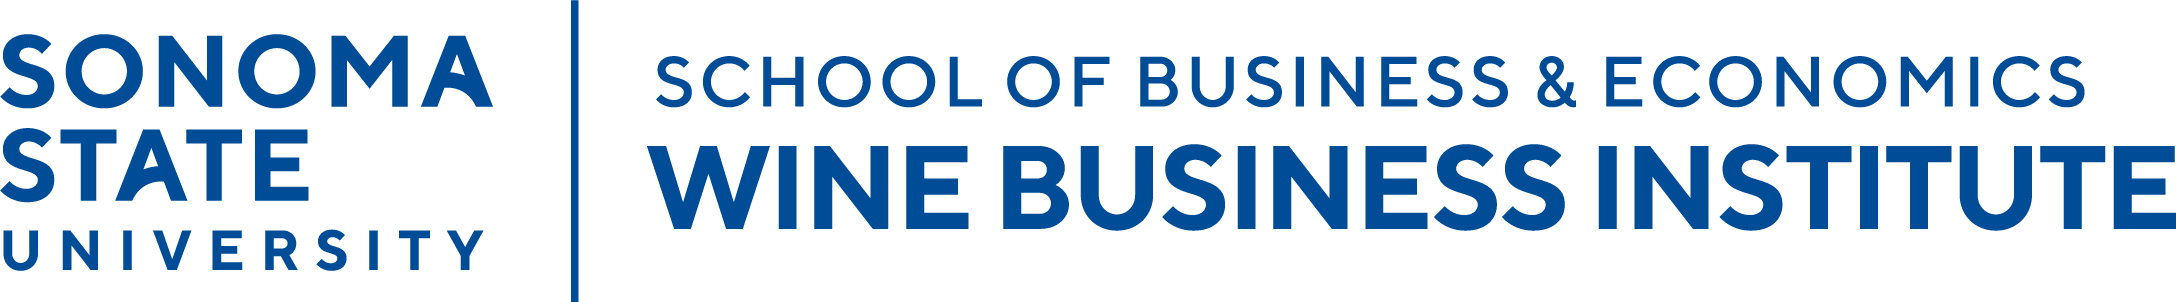 SBE Wine Business Institute Logo